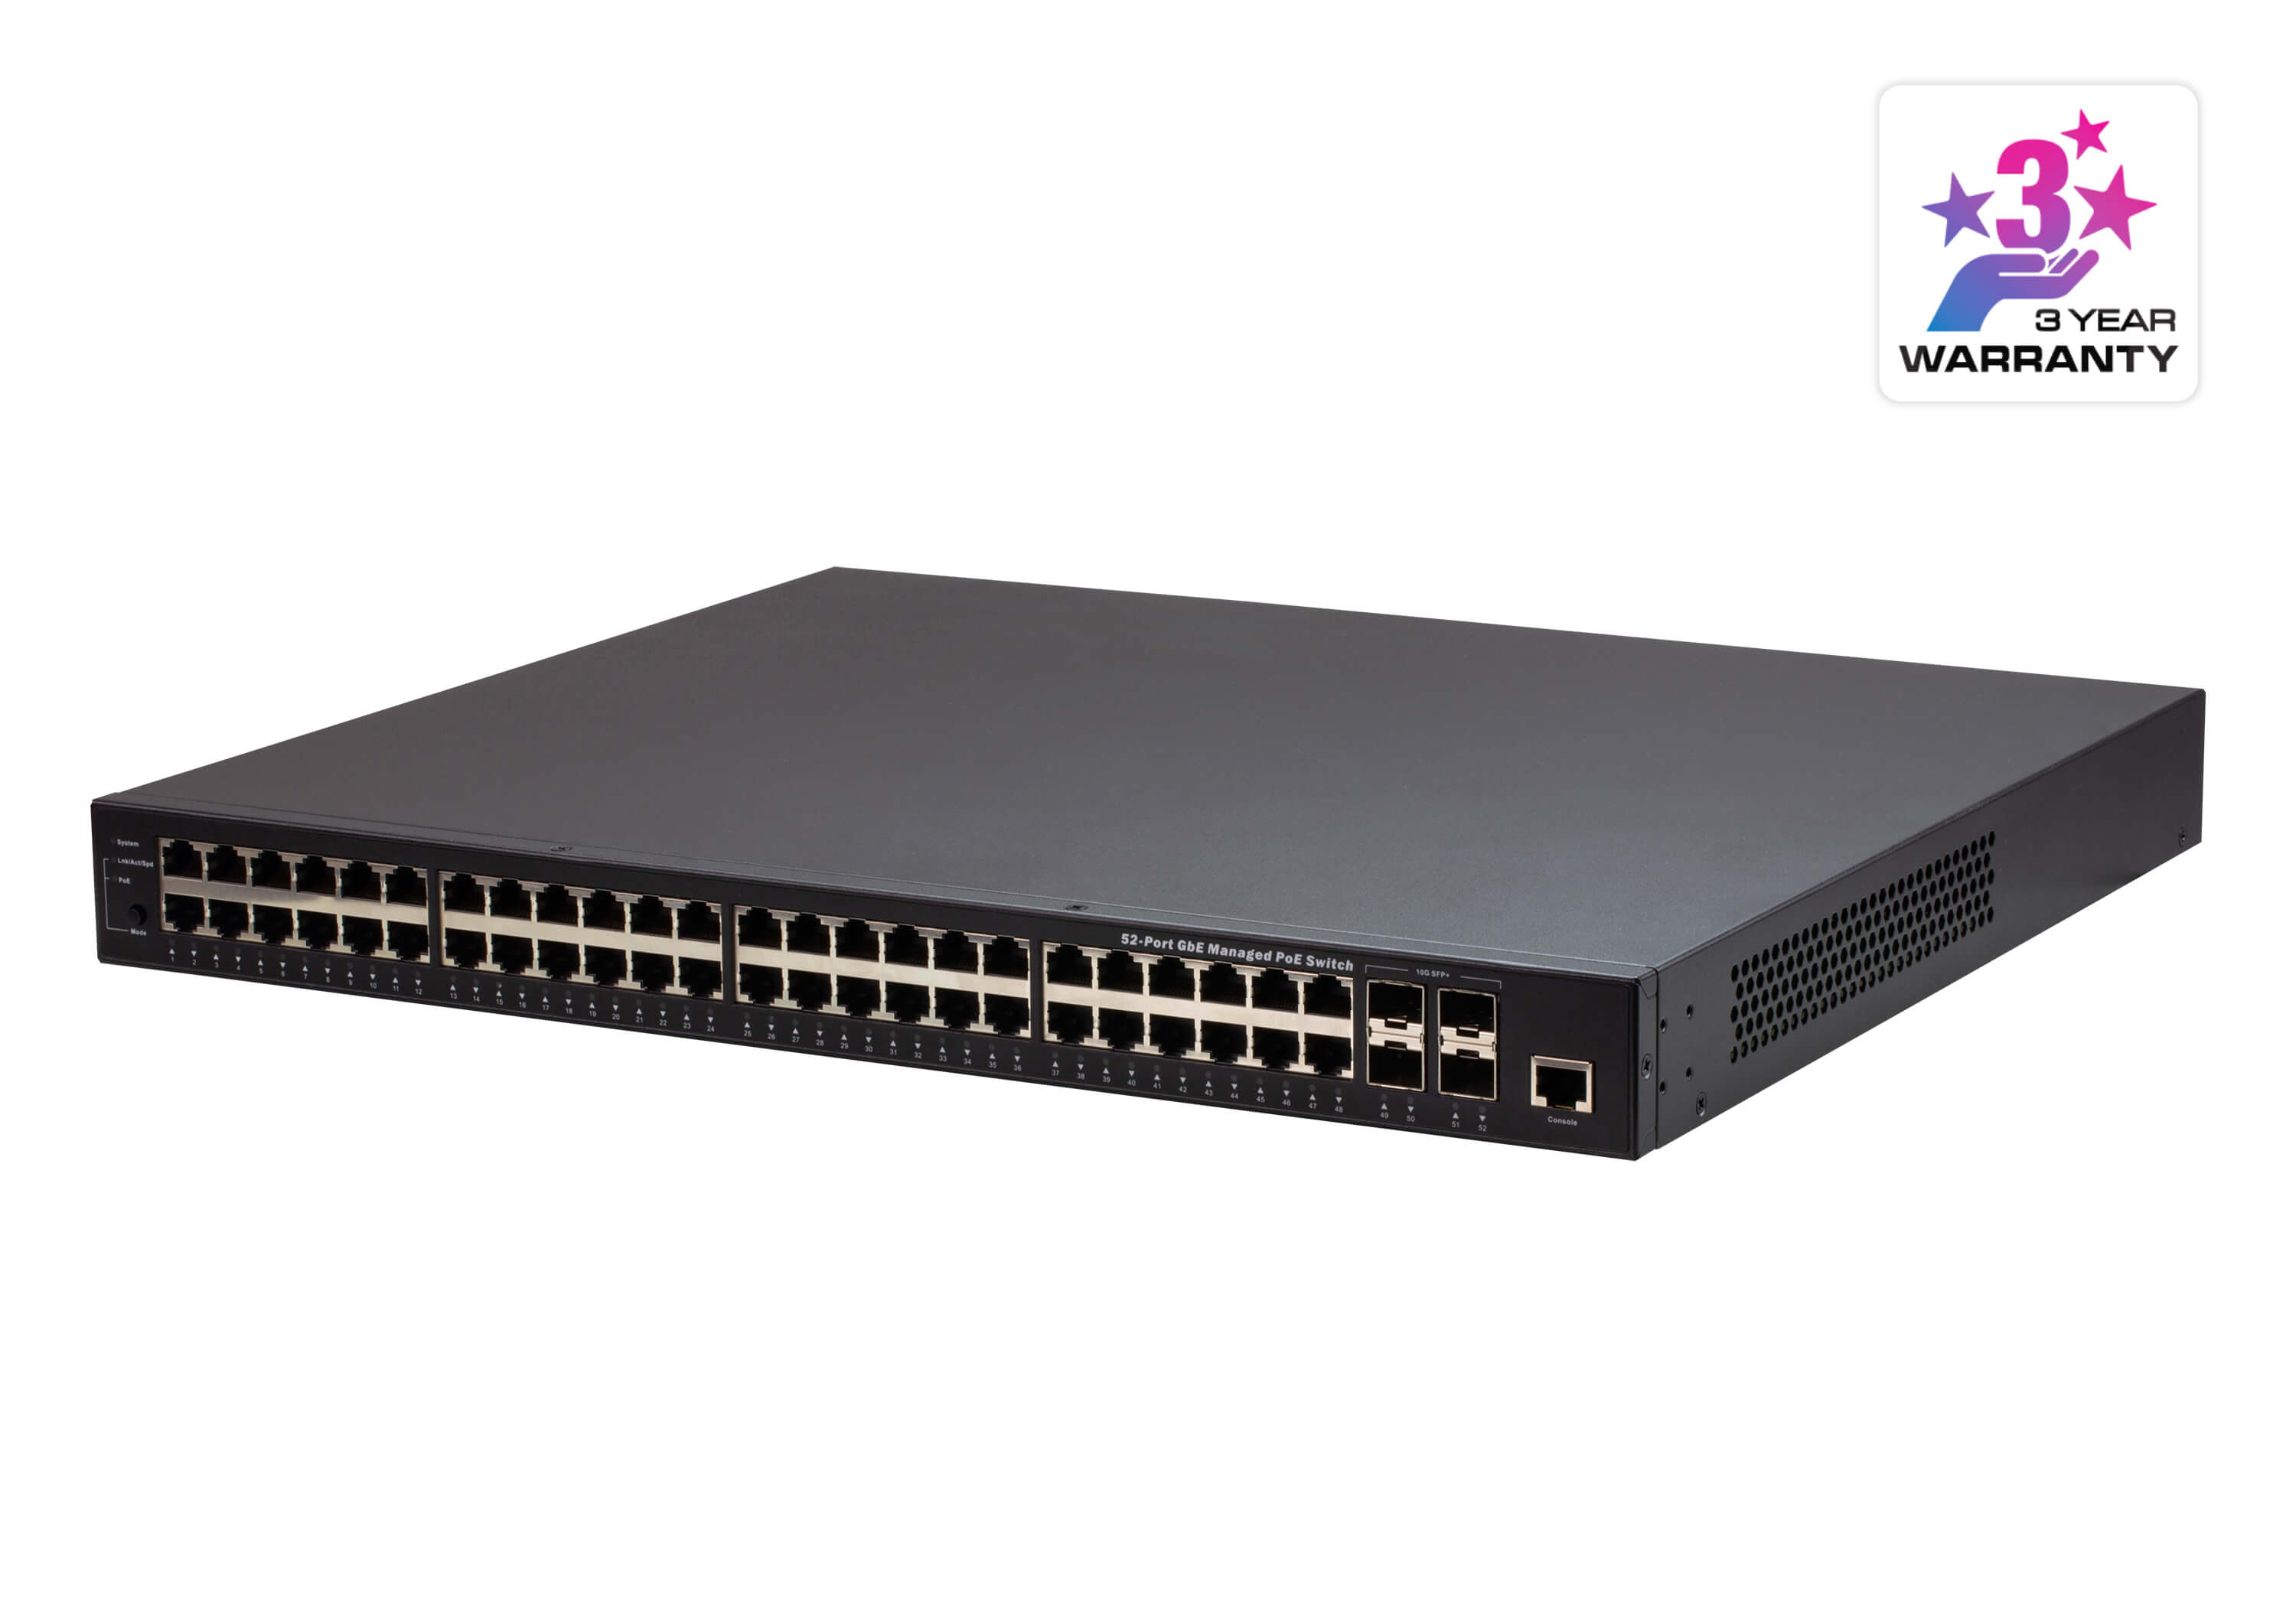 Aten Gigabit Ethernet Managed Switchwith PoE+ 740W, designed for use with the Aten KE/VE series of devices, 48 RJ-45 ports, IGMP v1/v2/v3 Snooping, IG